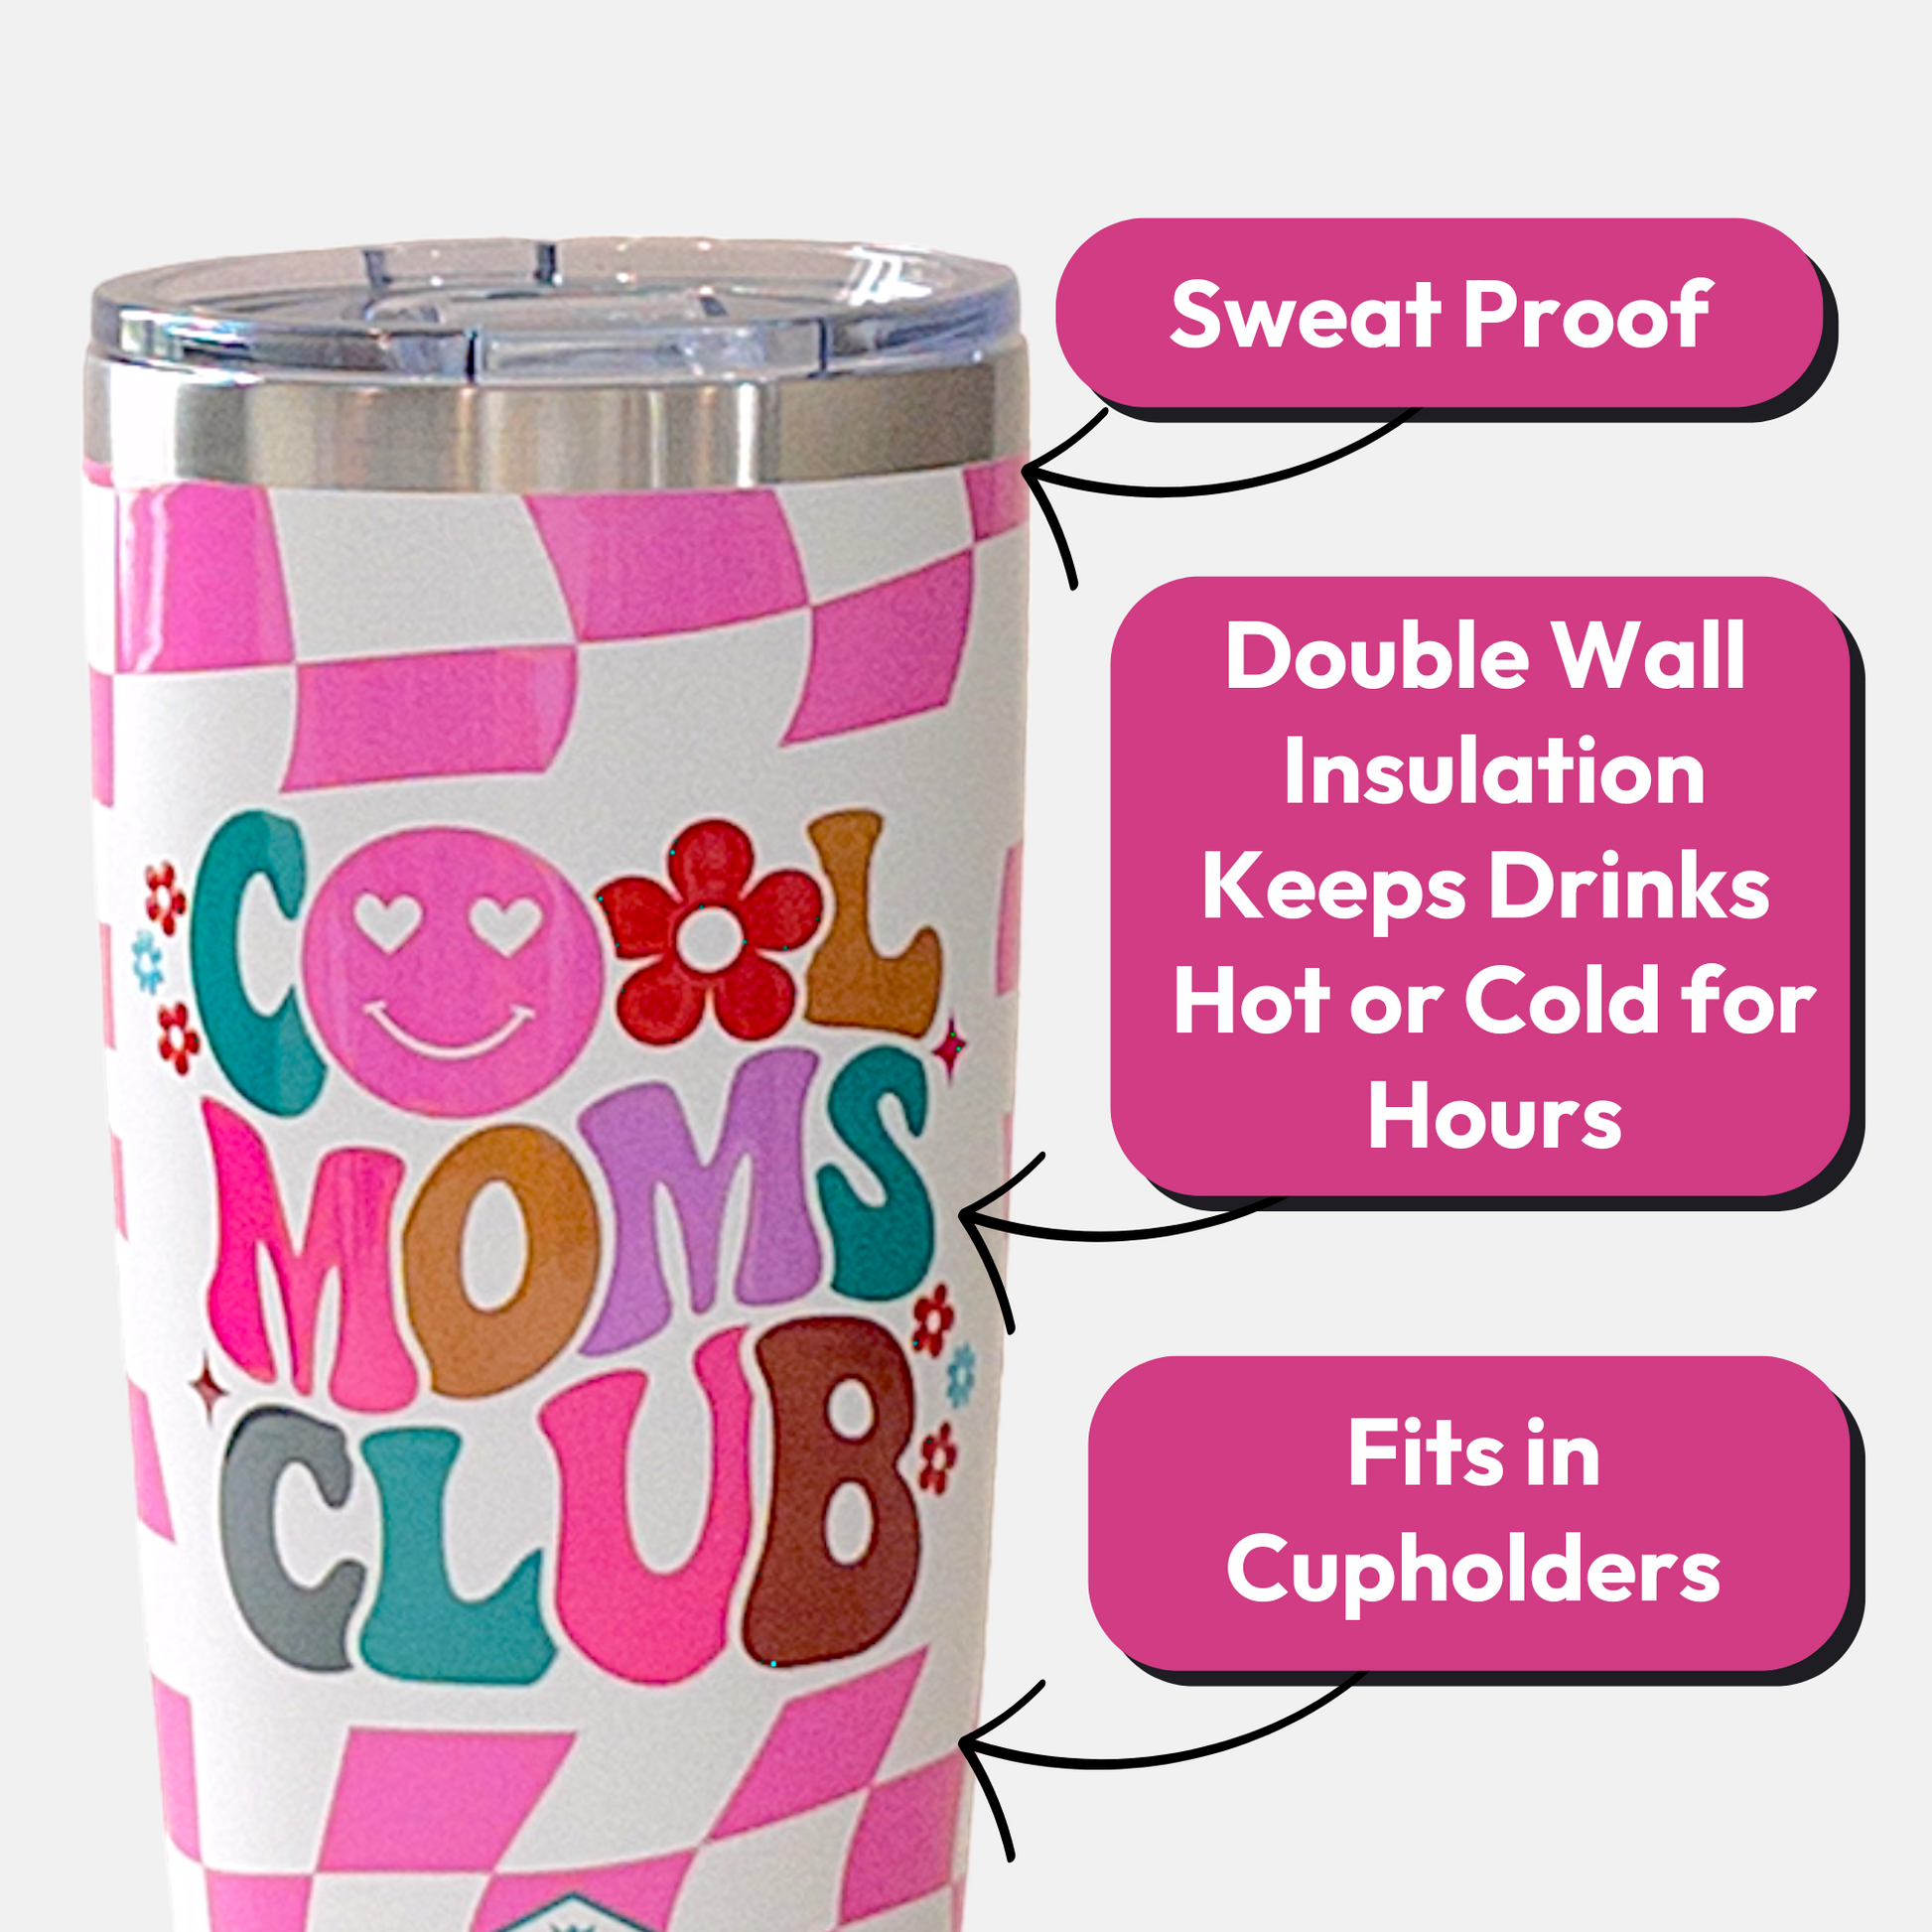 Cool Moms Club